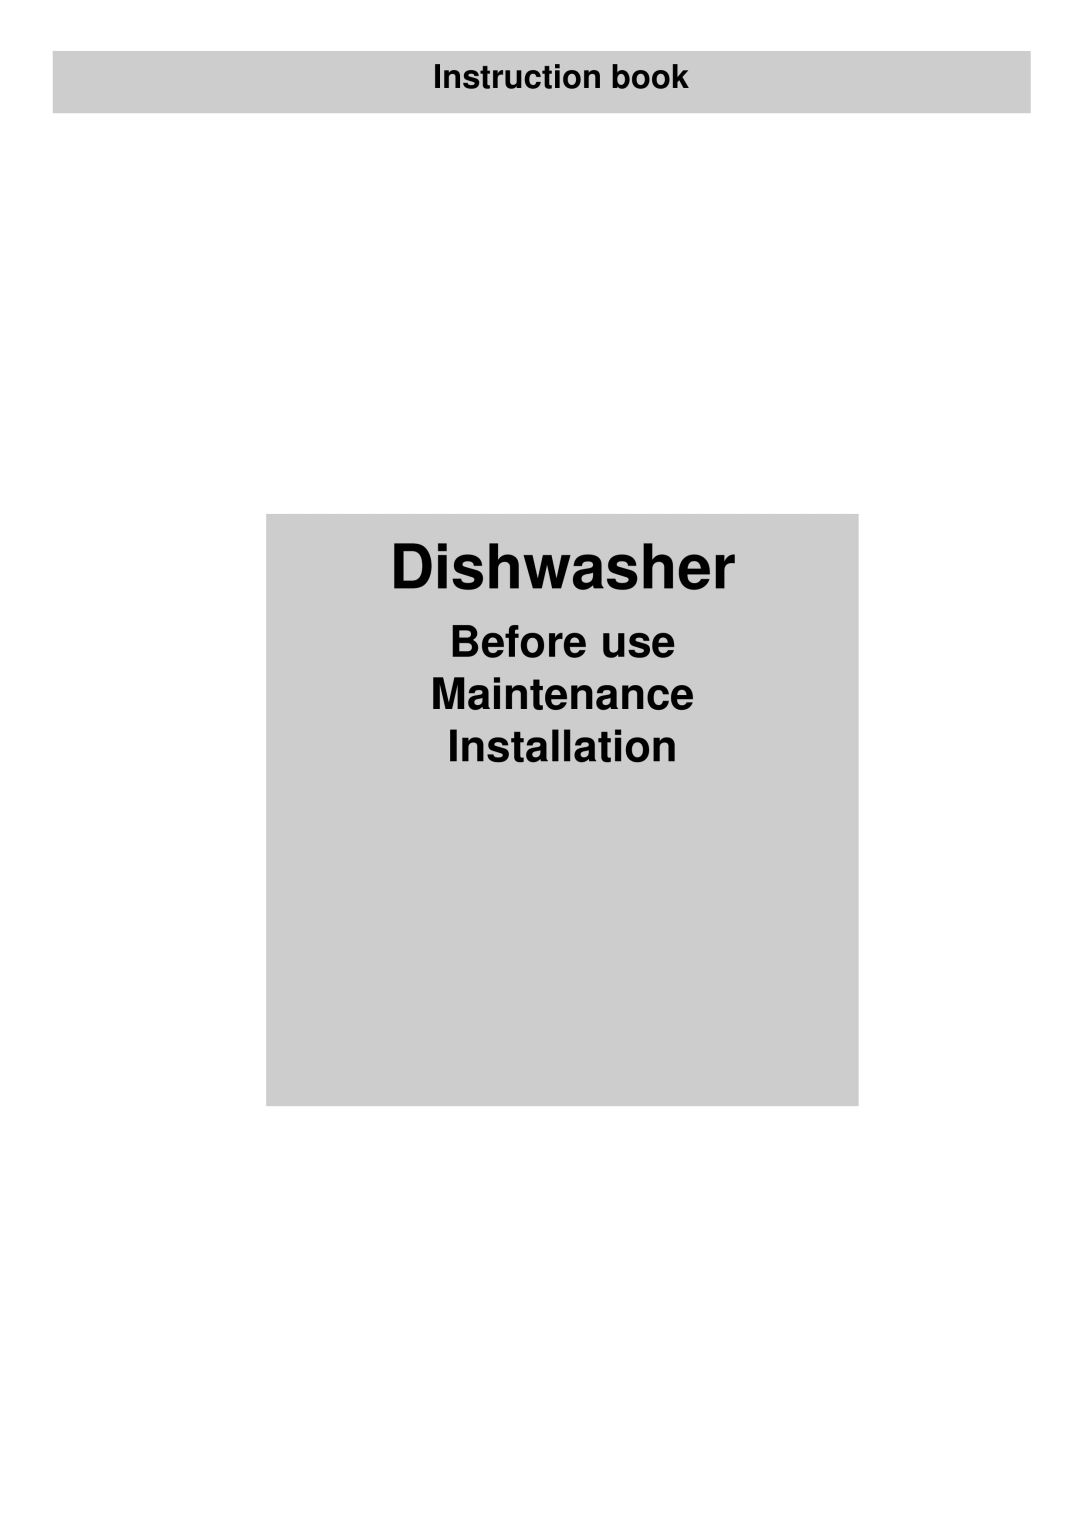 Zanussi DA 6153 manual Dishwasher, Before use Maintenance Installation, Instruction book 